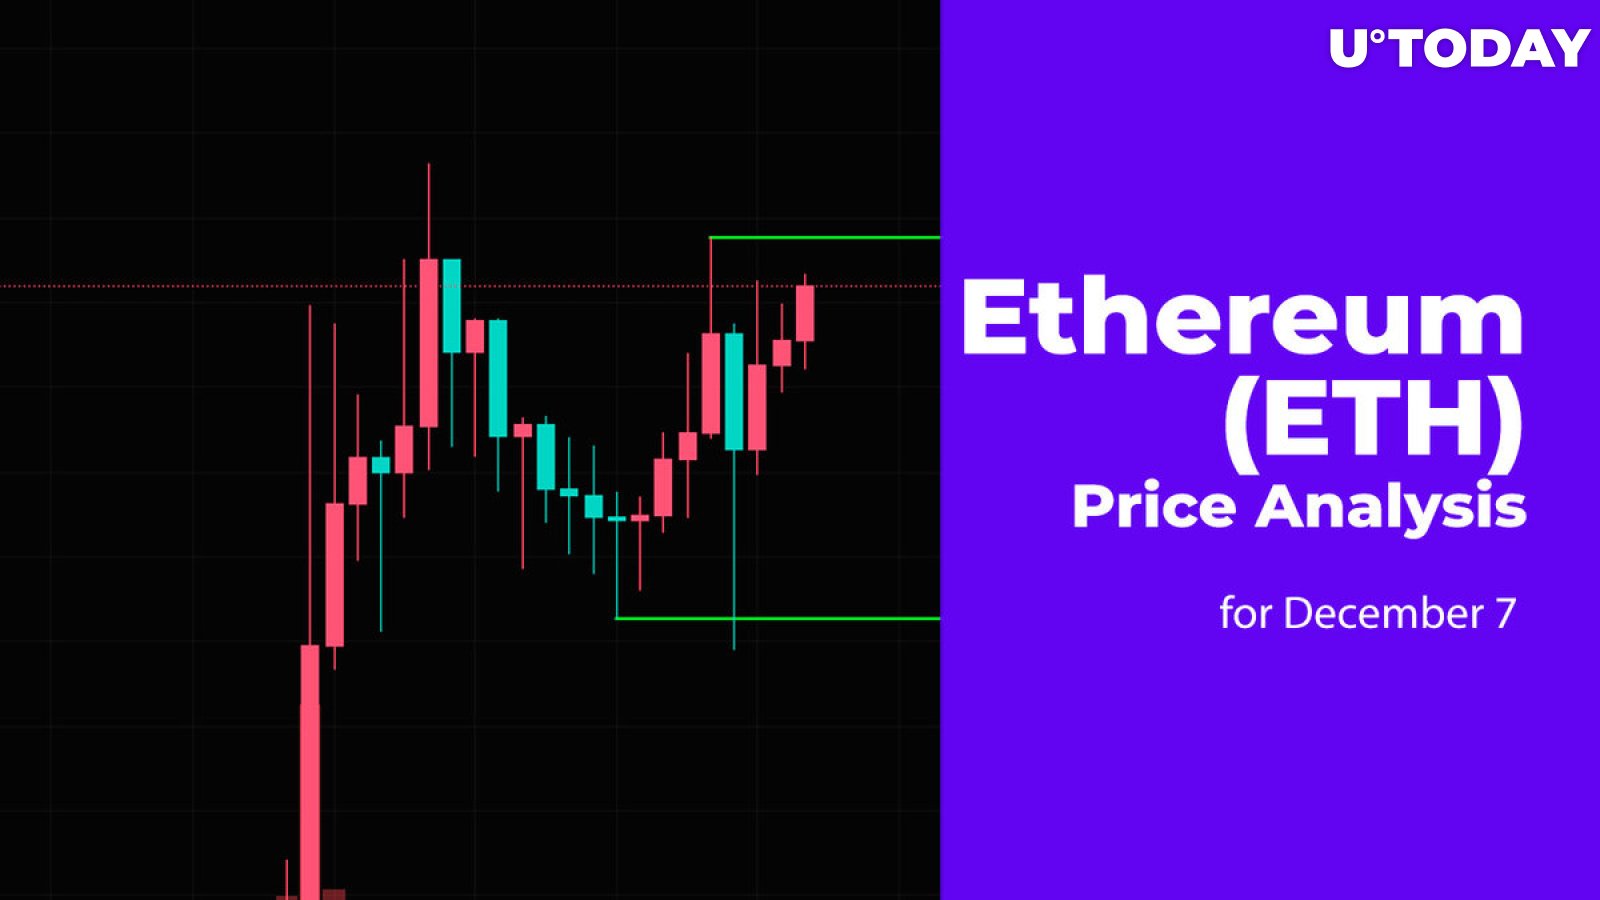 Ethereum (ETH) Price Analysis for December 7